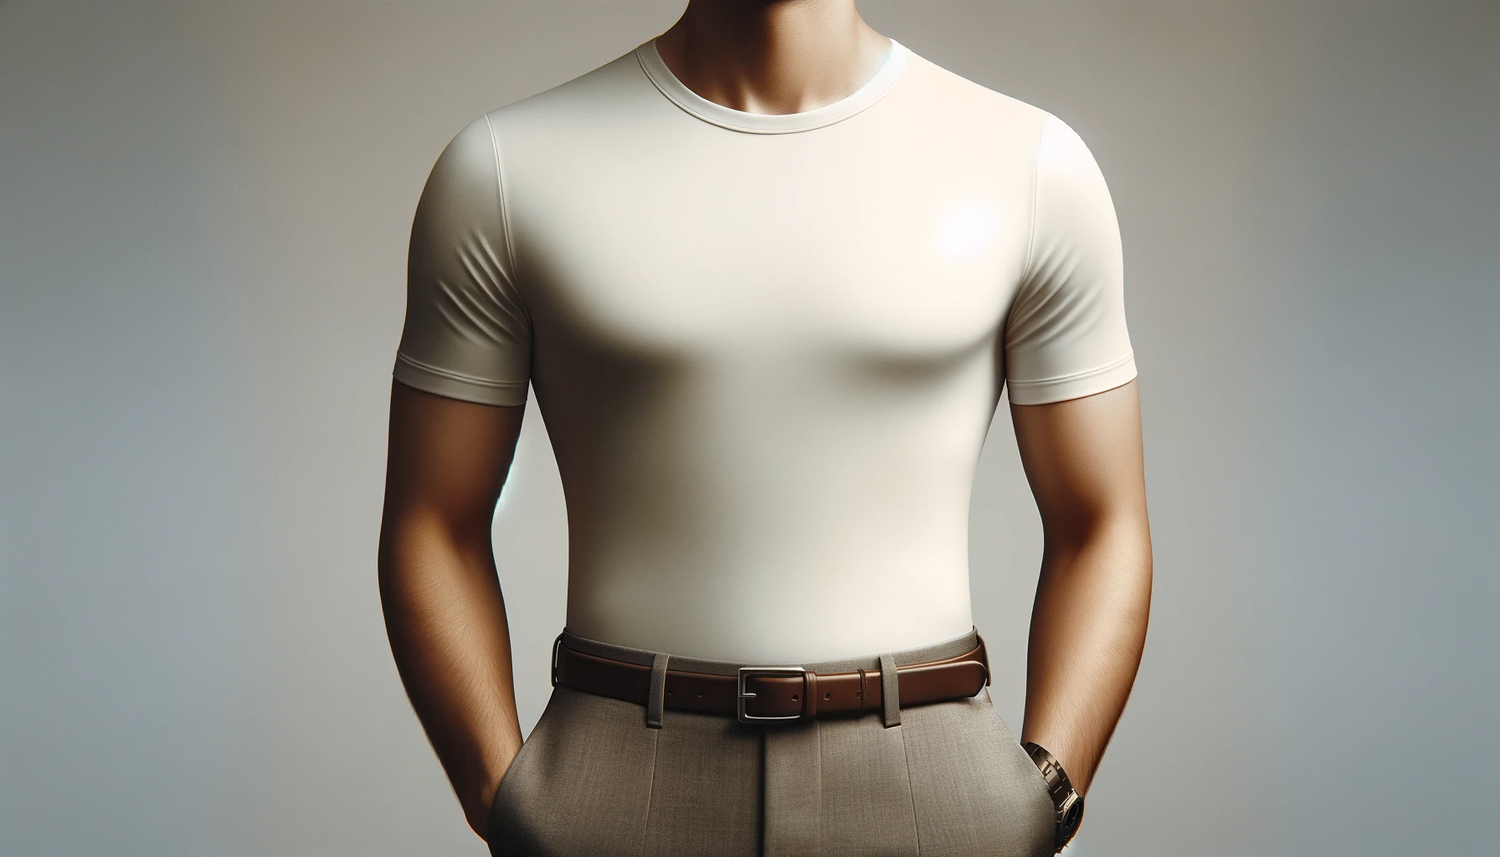 Should You Wear an Undershirt With a Dress Shirt?